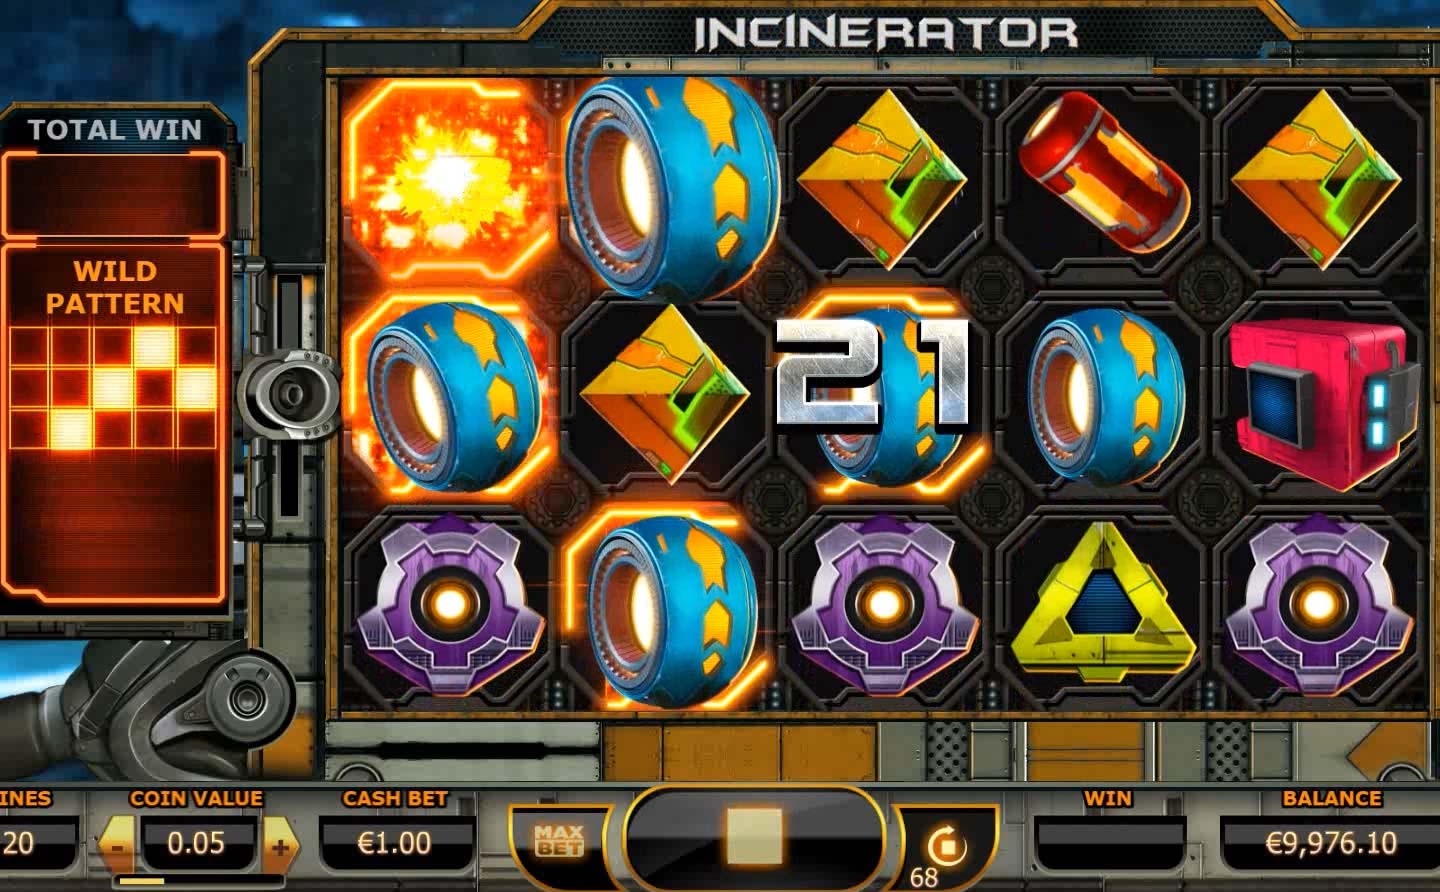 Play a free slot machine Incinerator